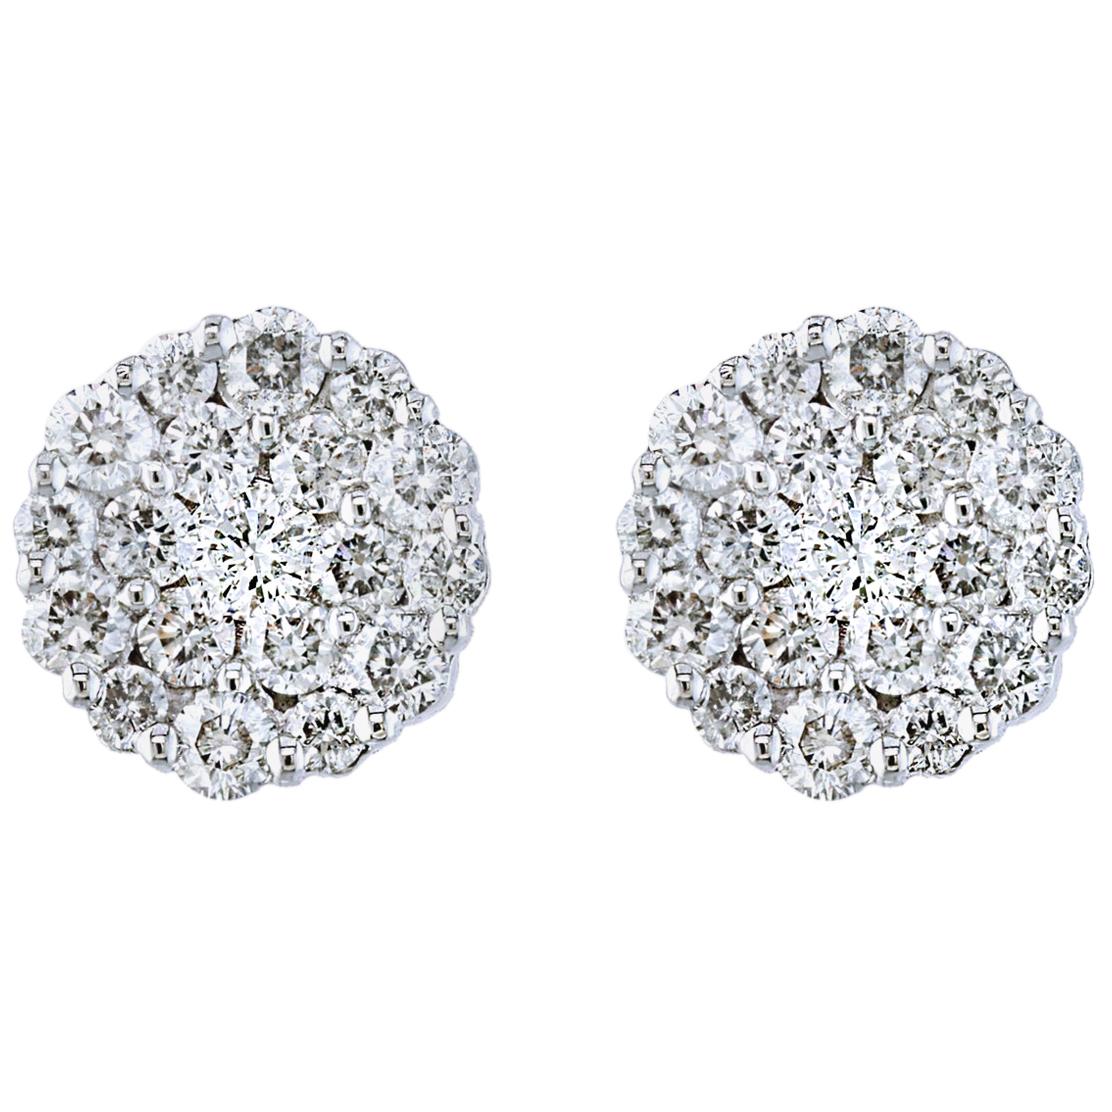 1.60 Carat Diamond Floral Cluster Flower Stud Earrings in 18 Karat White Gold